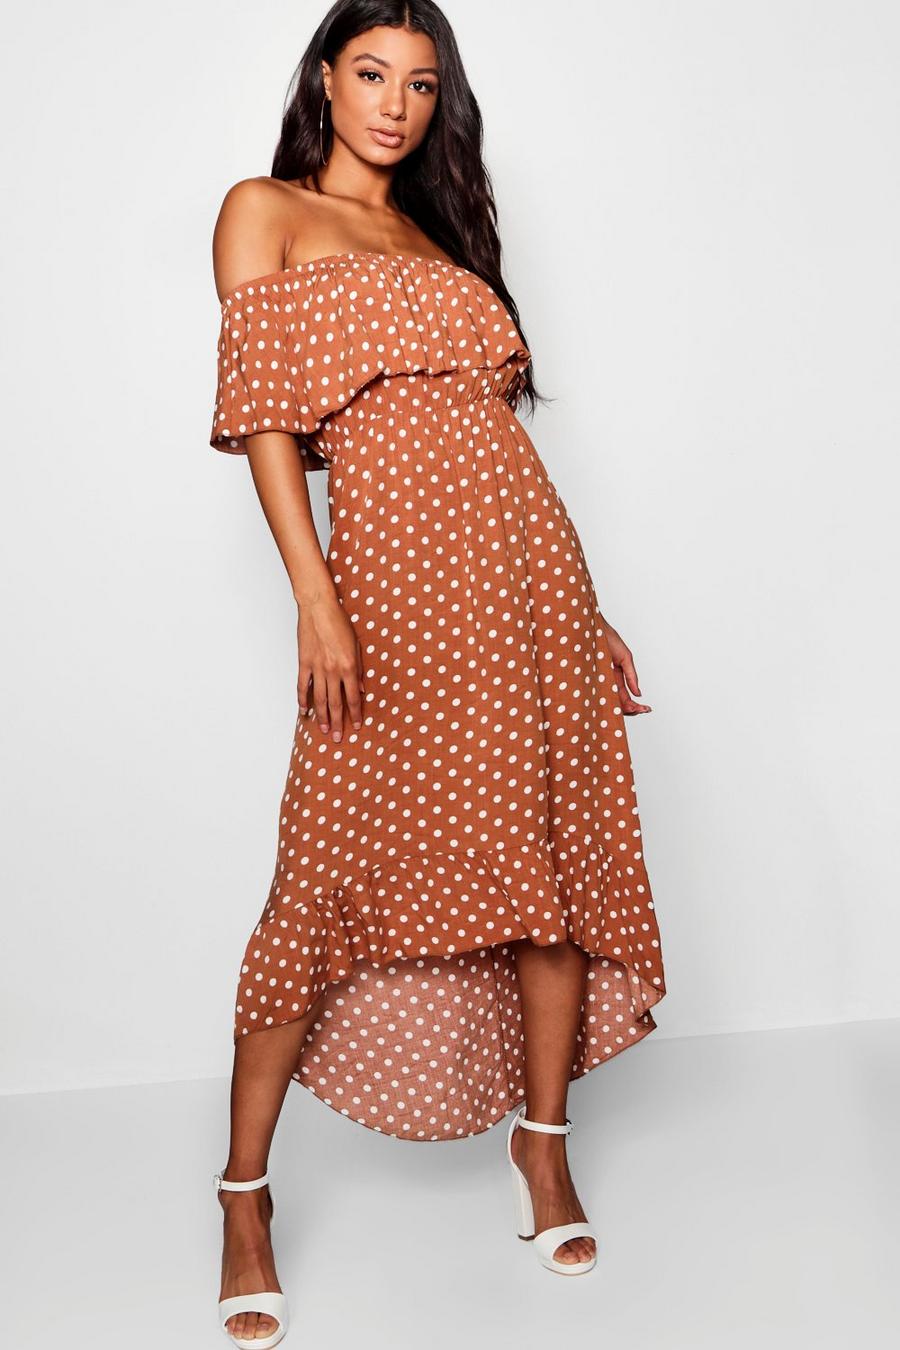 Chocolate brown Woven Polka Dot Print Off The Shoulder Maxi Dress